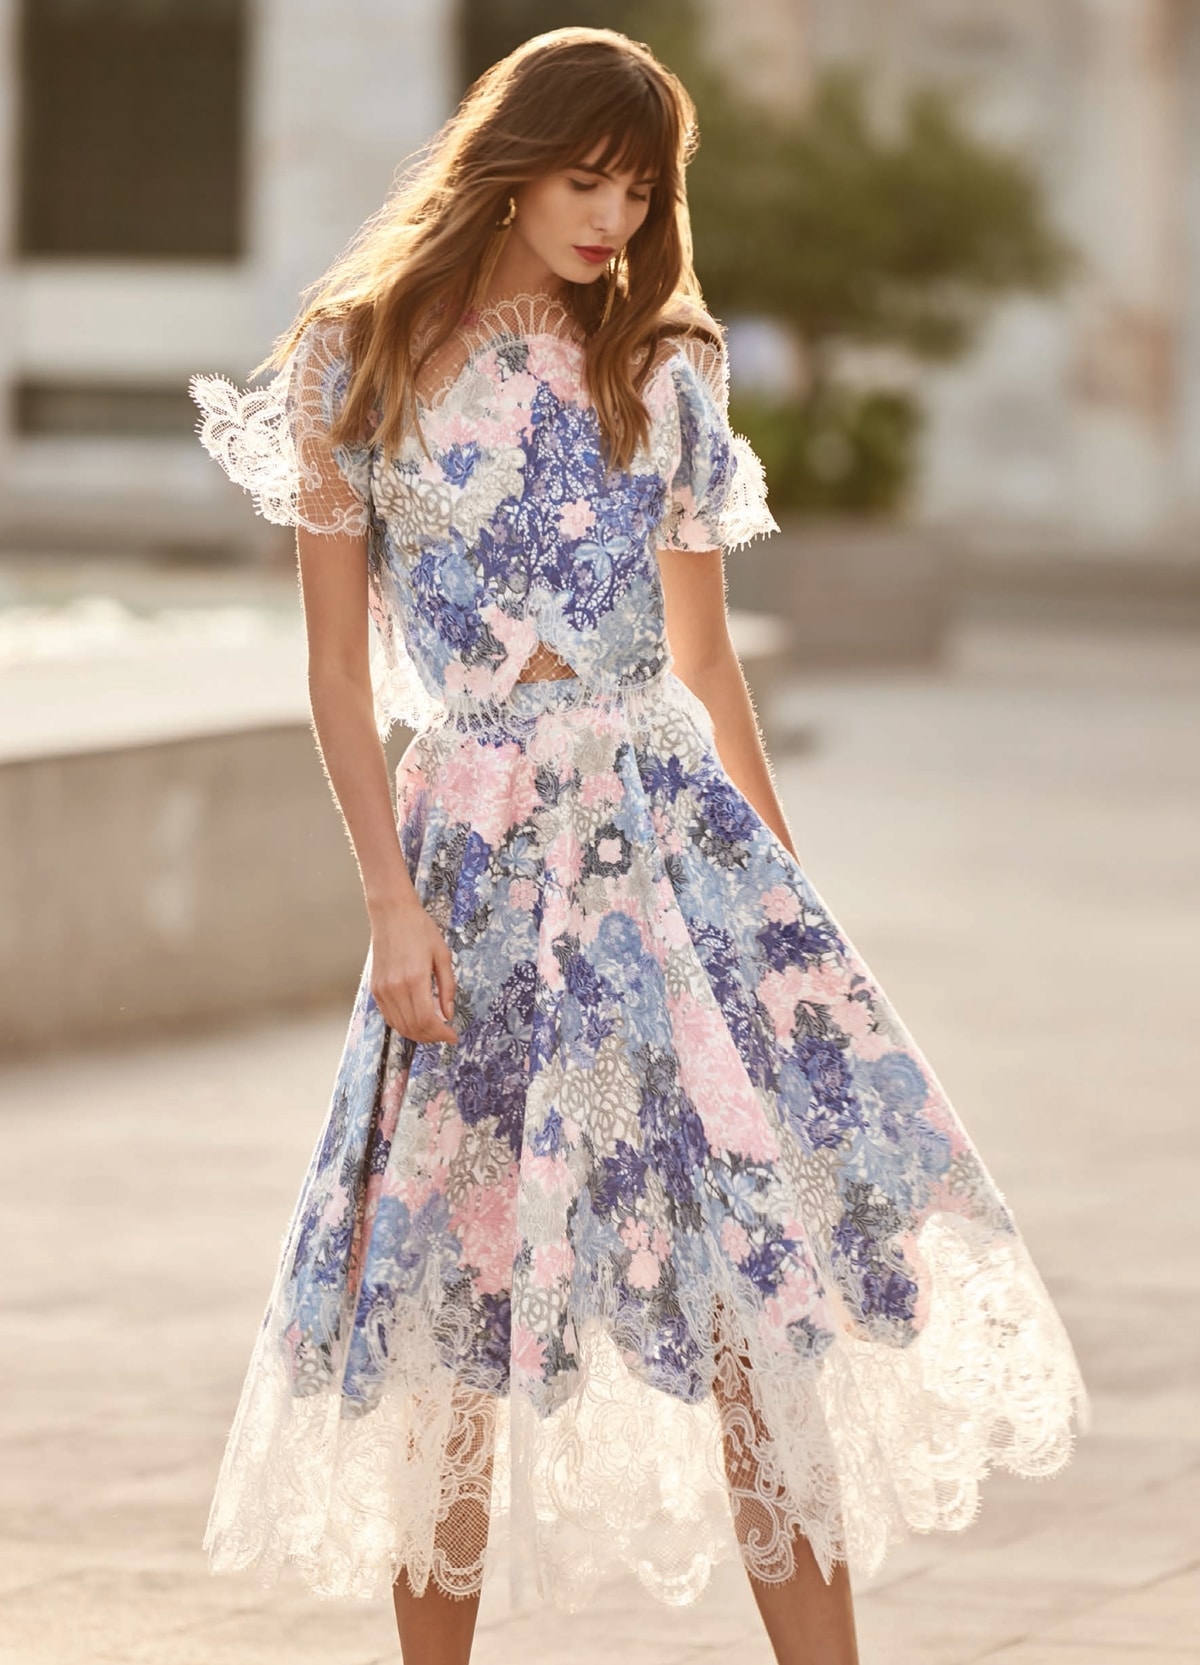 Midi two pieces φόρεμα με floral φούστα με κεντήματα και ασορτί crop top